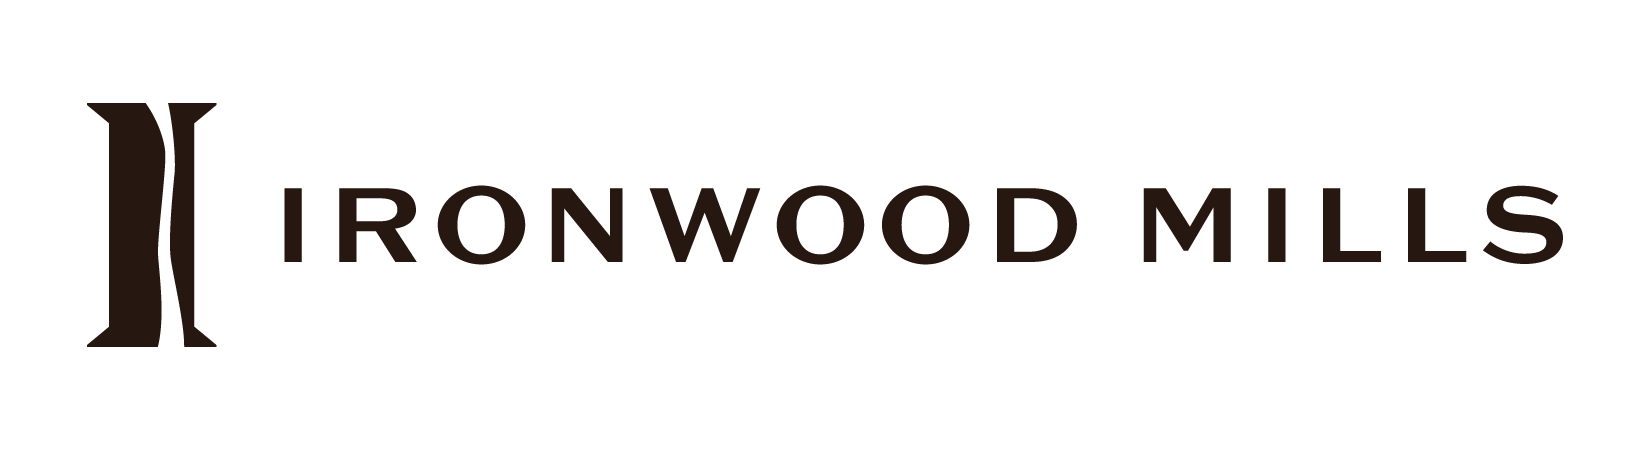 Ironwood Mills Primary Logo - Coffee